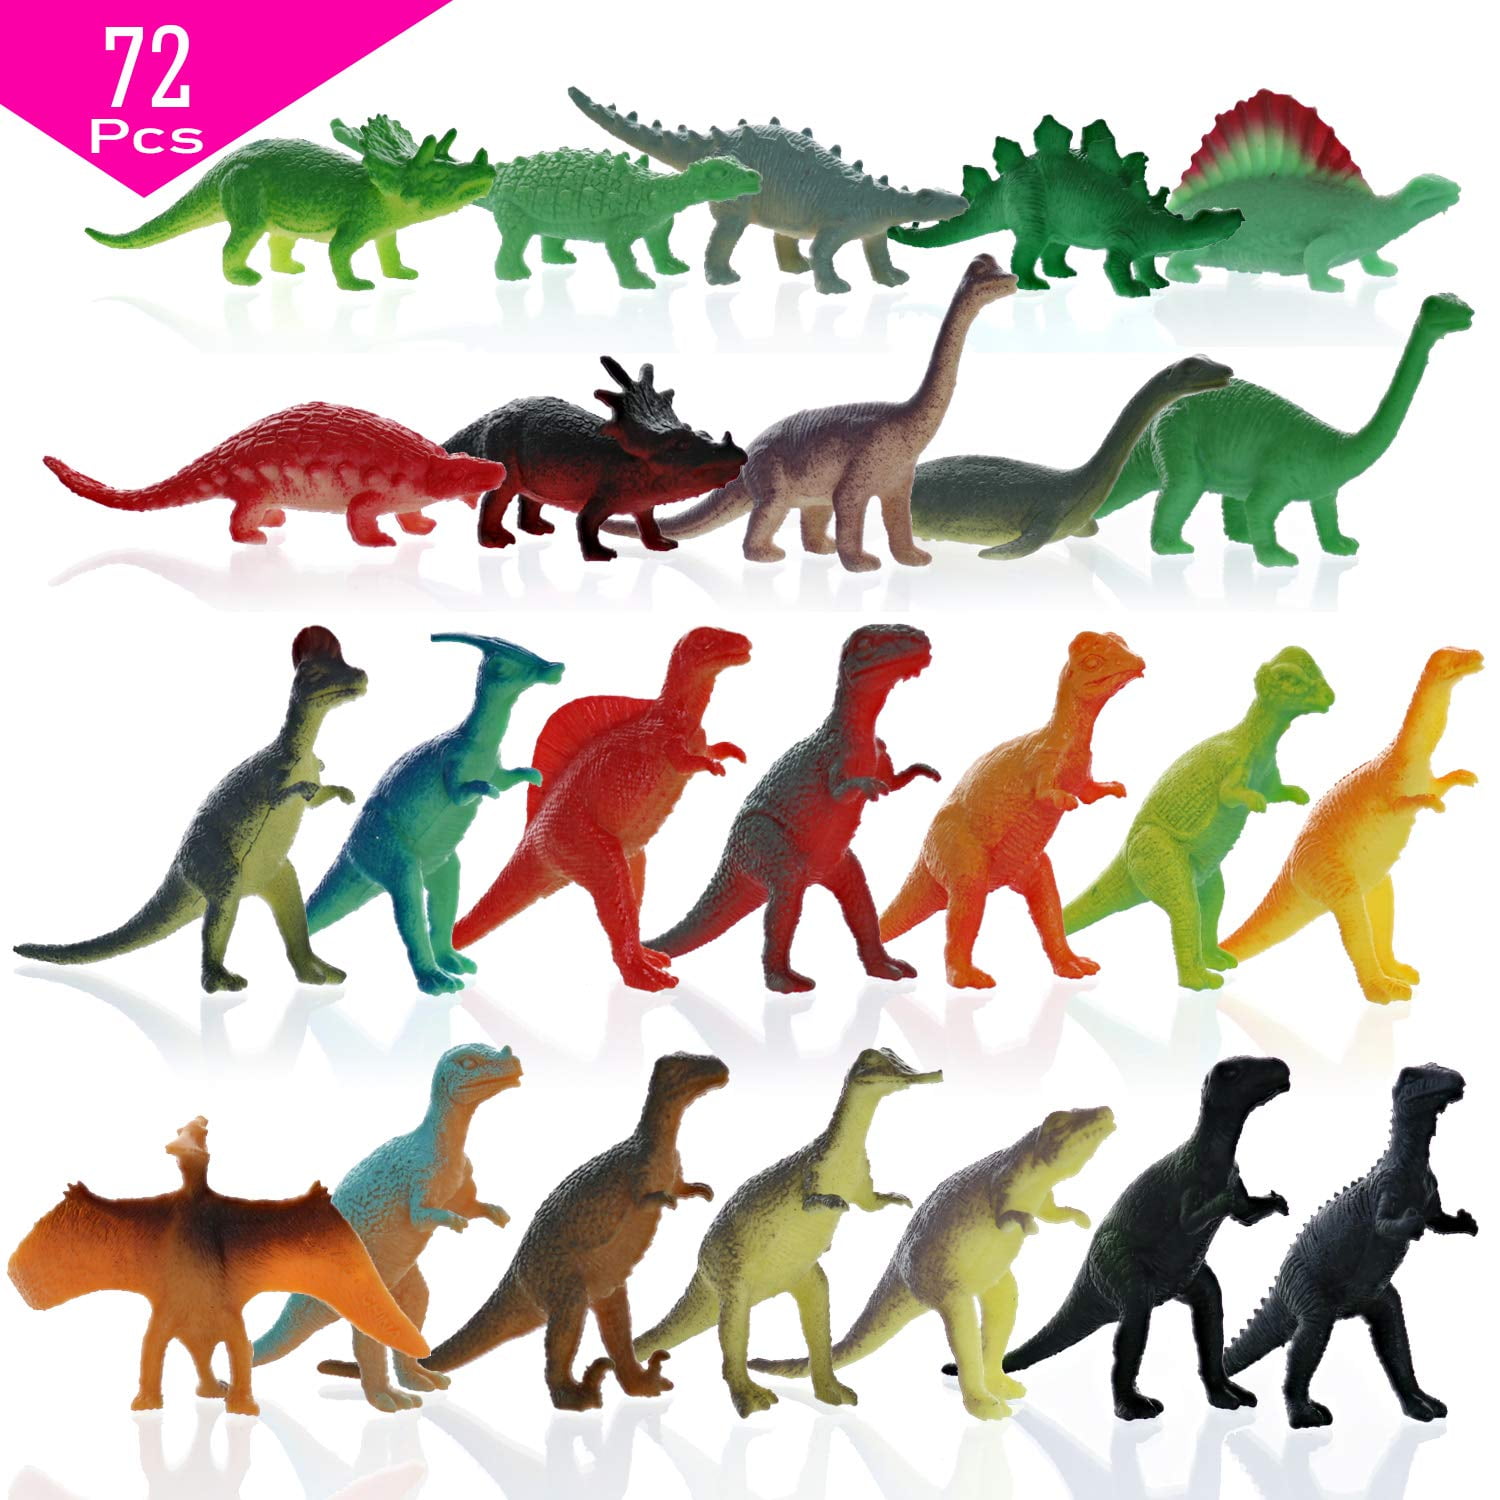 Mini Dinosaurs Figurines Dino Mania cake topper 15-20cm figurine